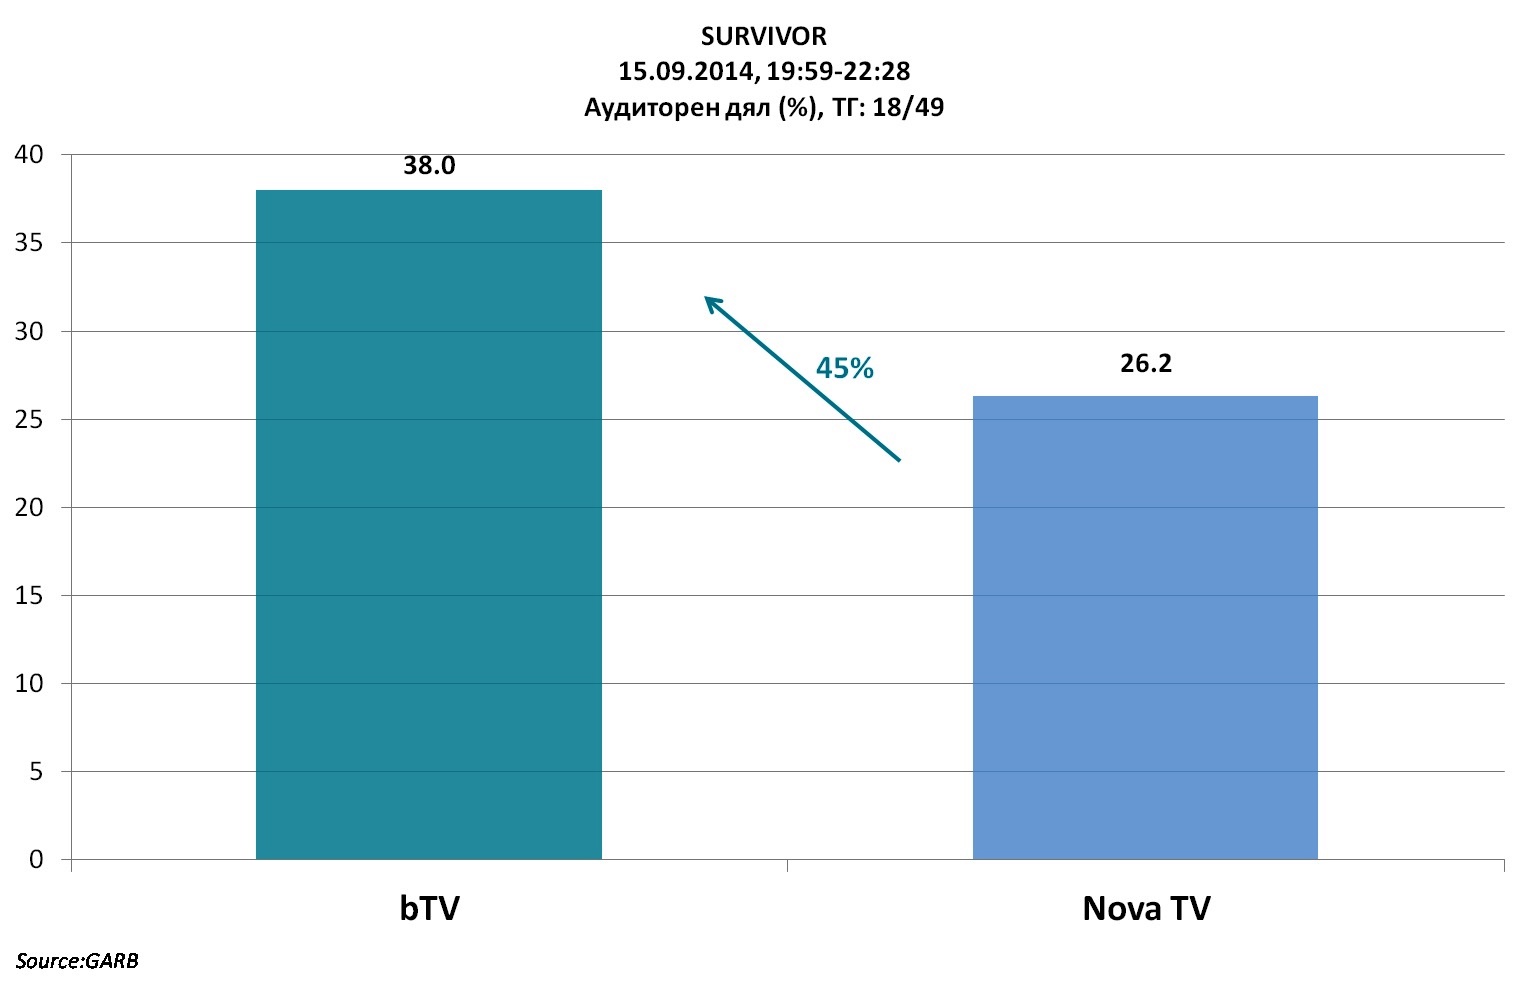 графика 1: аудиторен дял, 19:59 - 22:28 ч., GARB